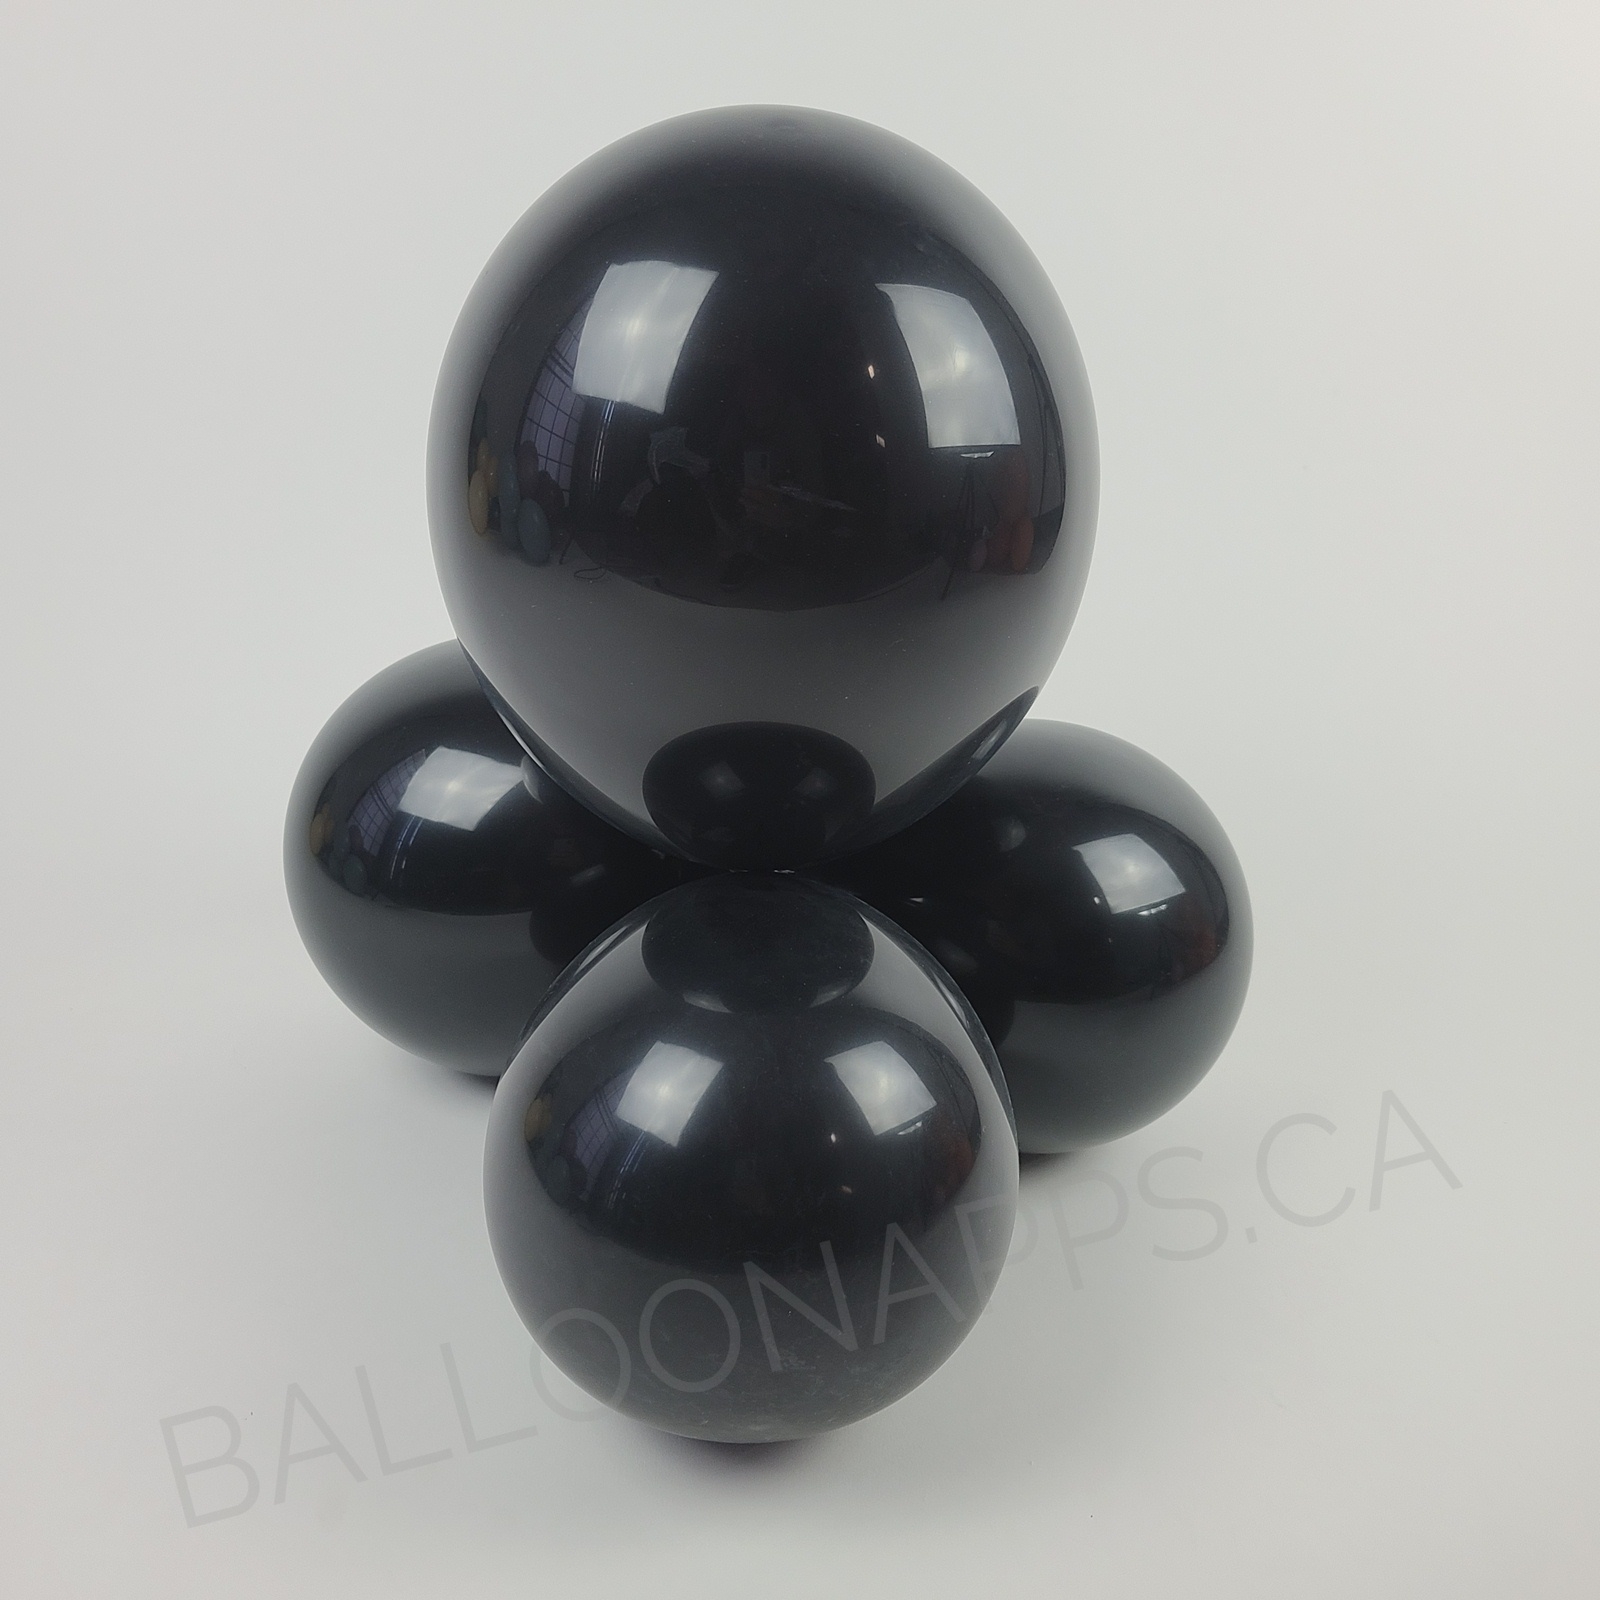 balloon texture ECONO (100) 12